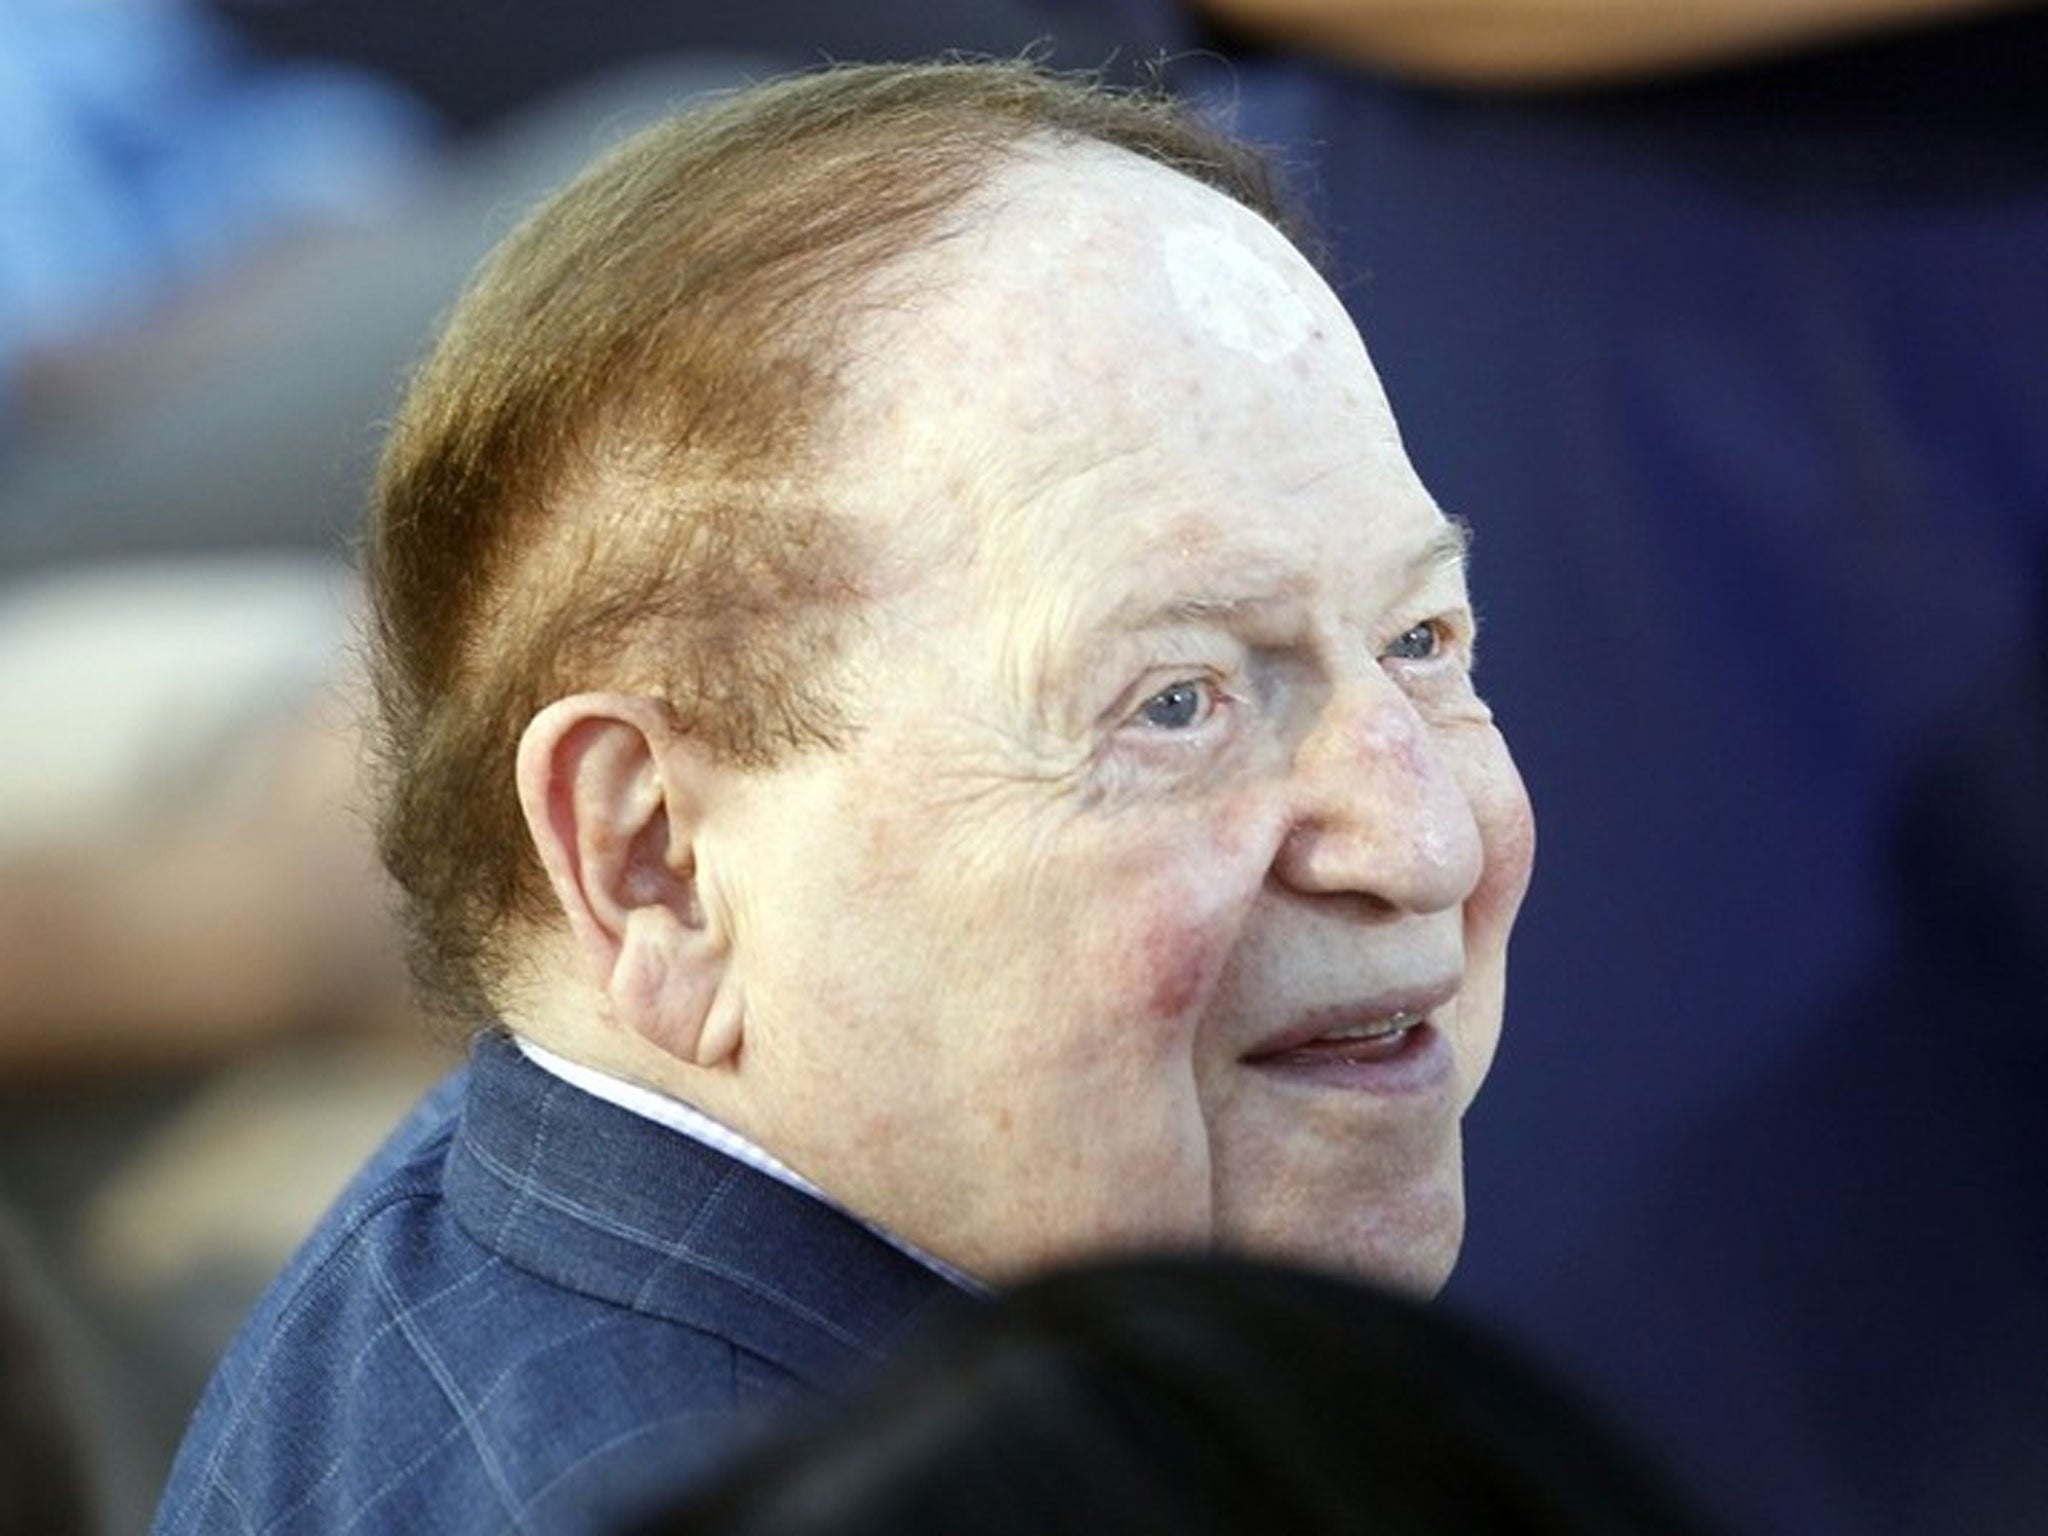 Gambling magnate Sheldon Adelson has a net worth of over $25 billion